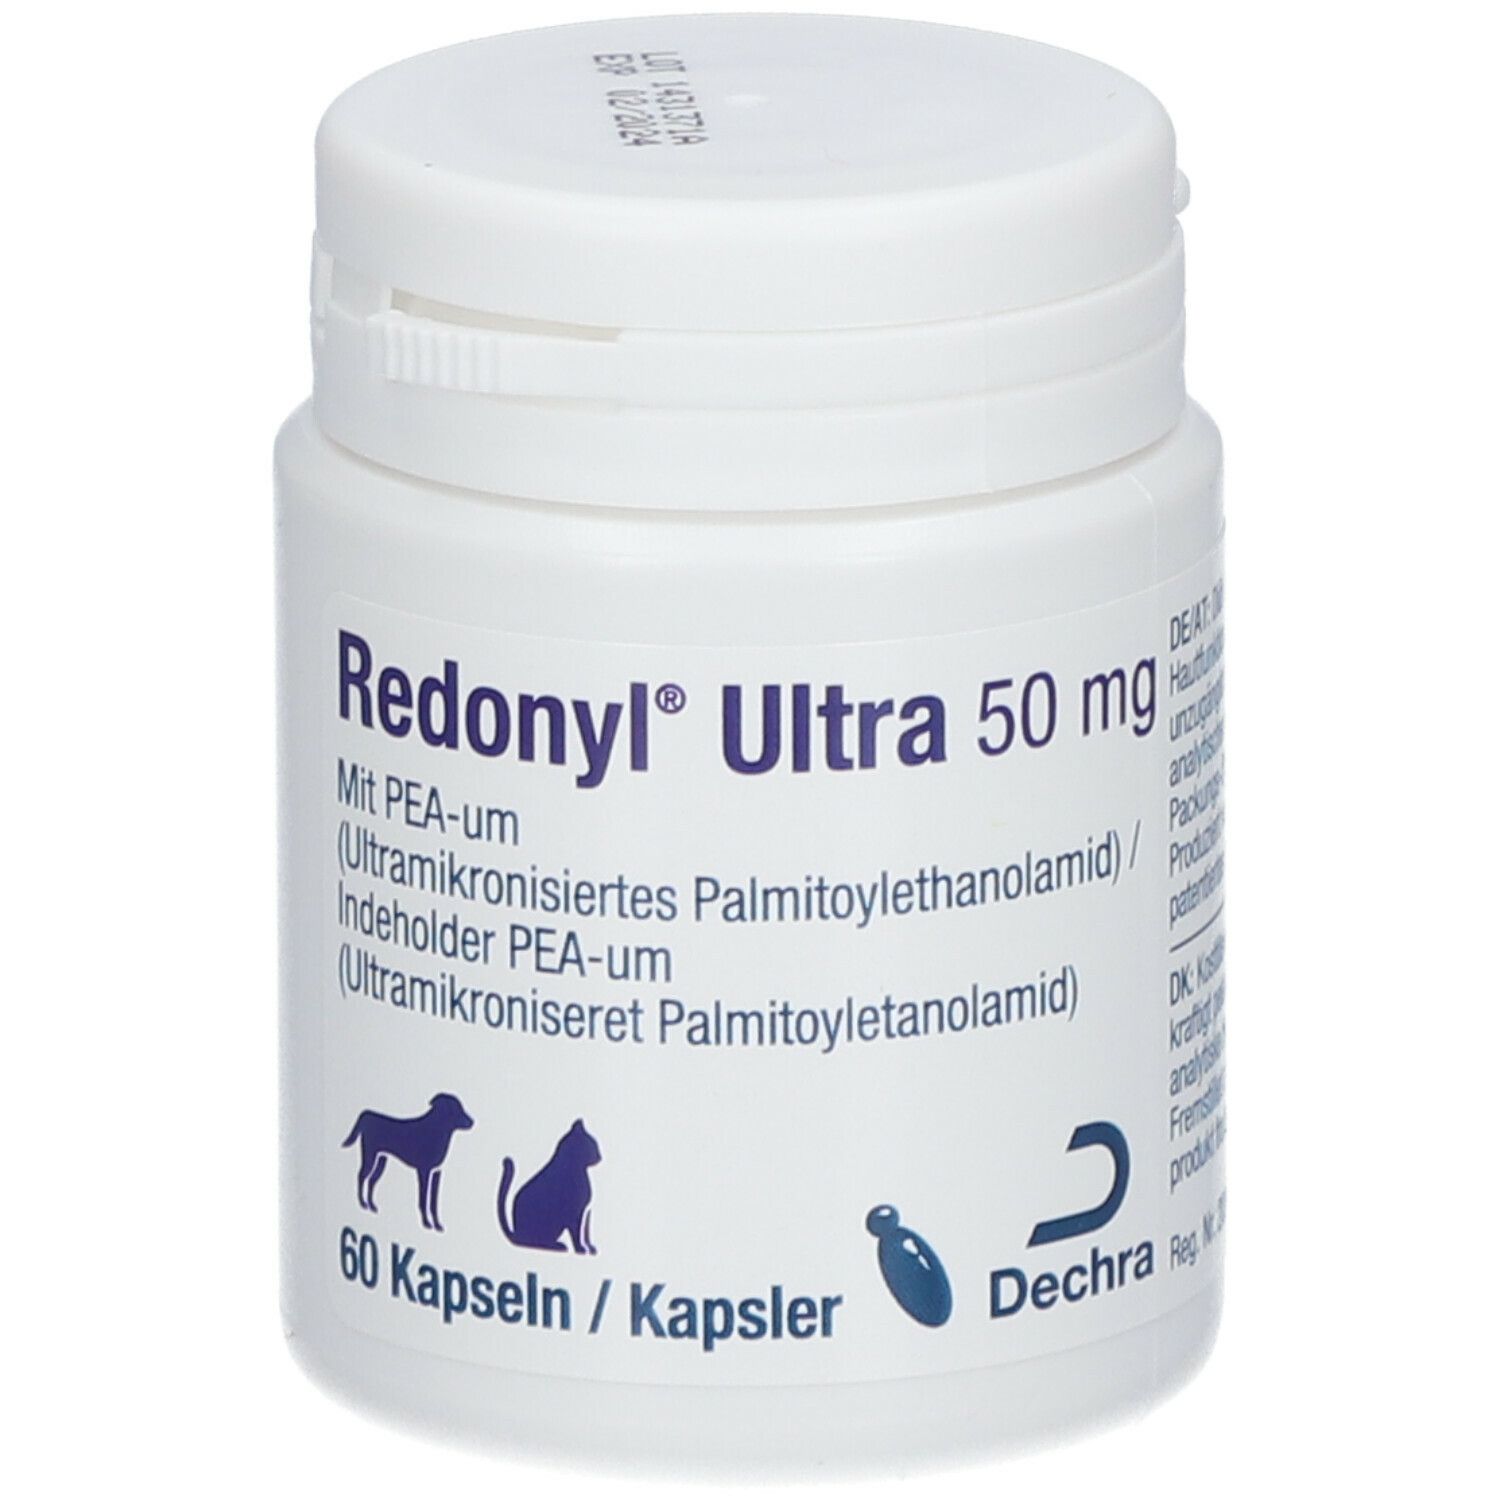 Redonyl® Ultra 50 mg